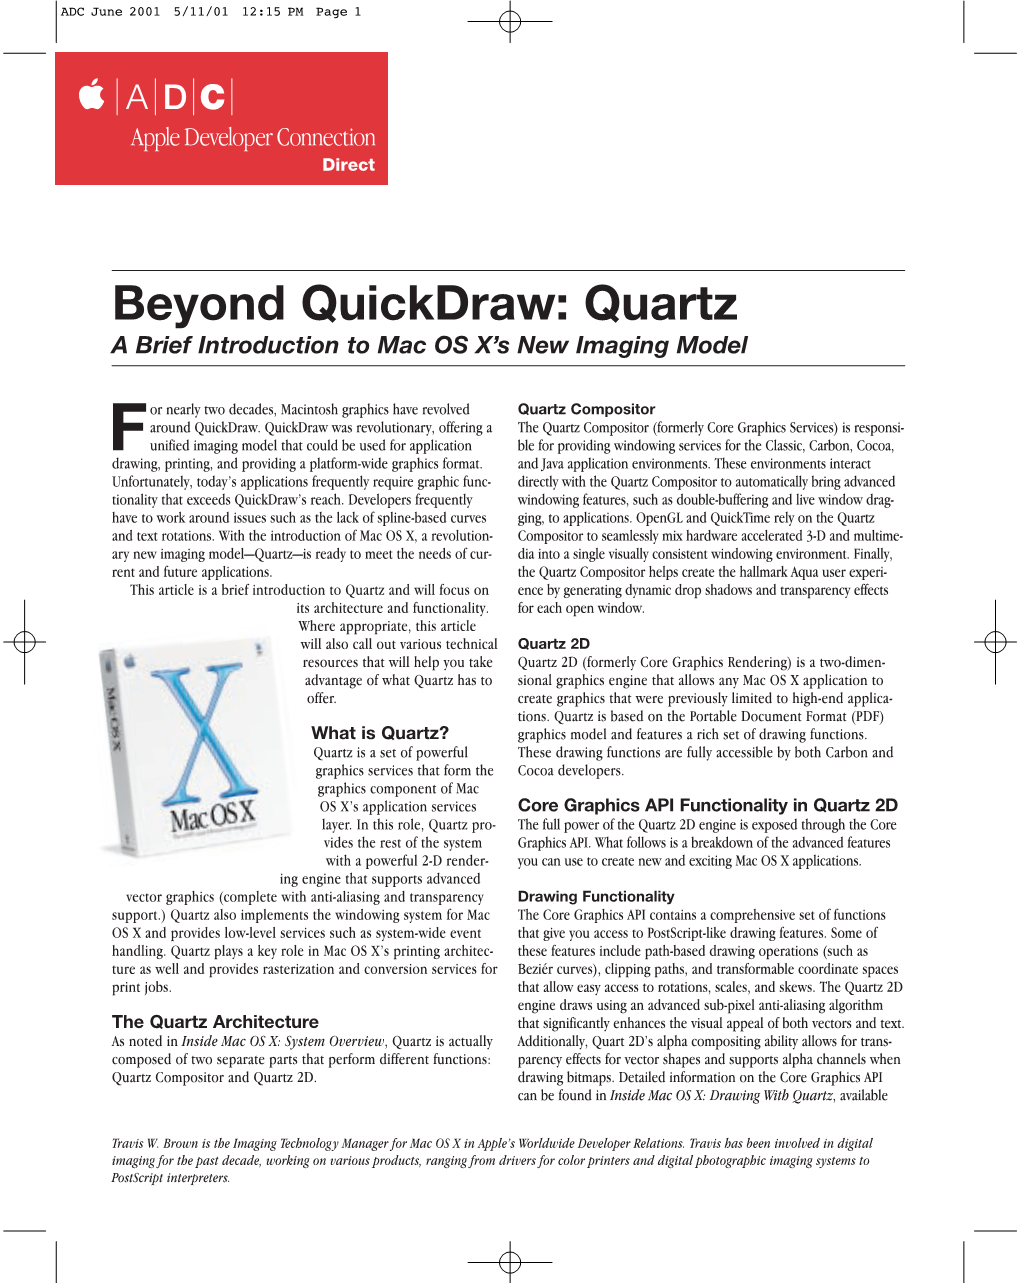 "Beyond Quickdraw: Quartz" (PDF)